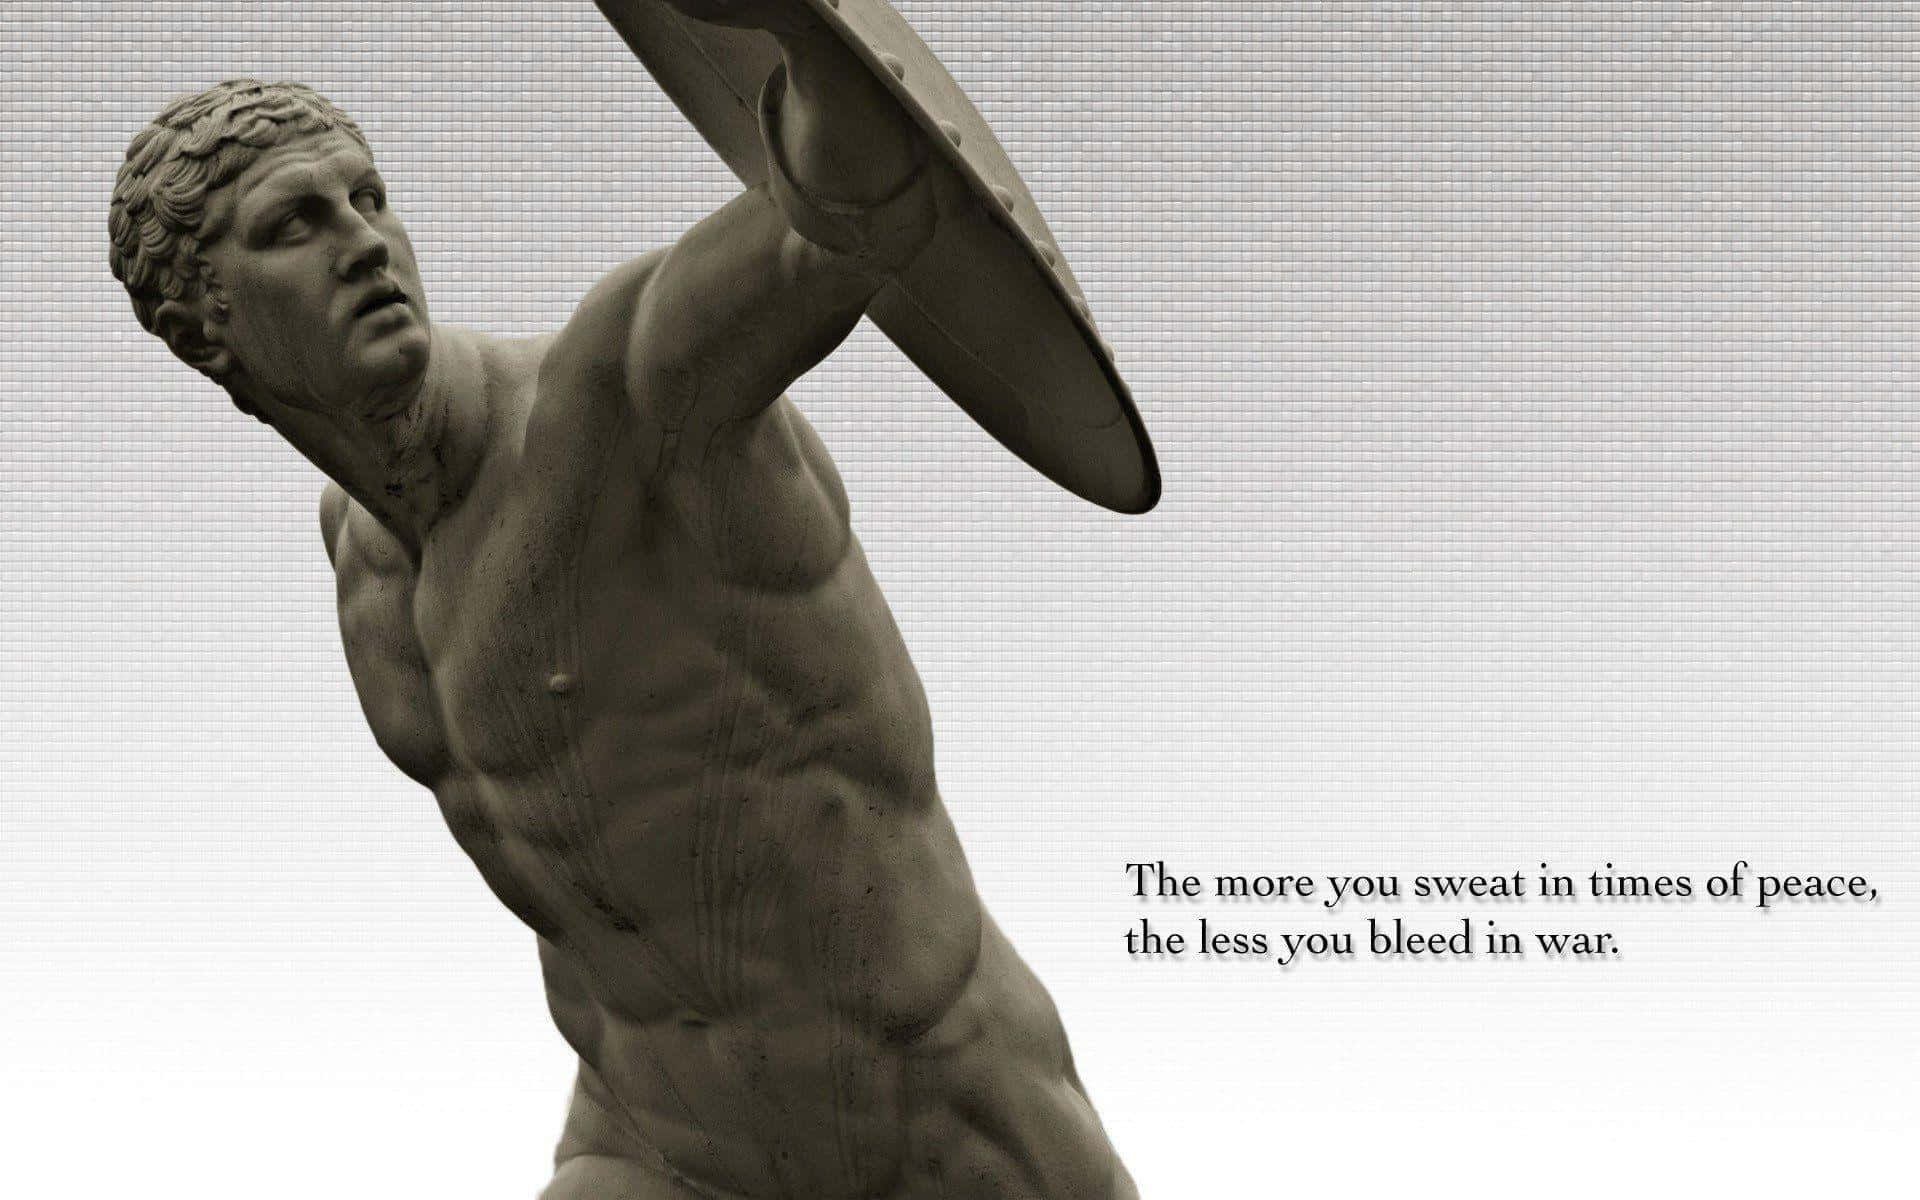 Philosophical Warrior Statue Quote Wallpaper